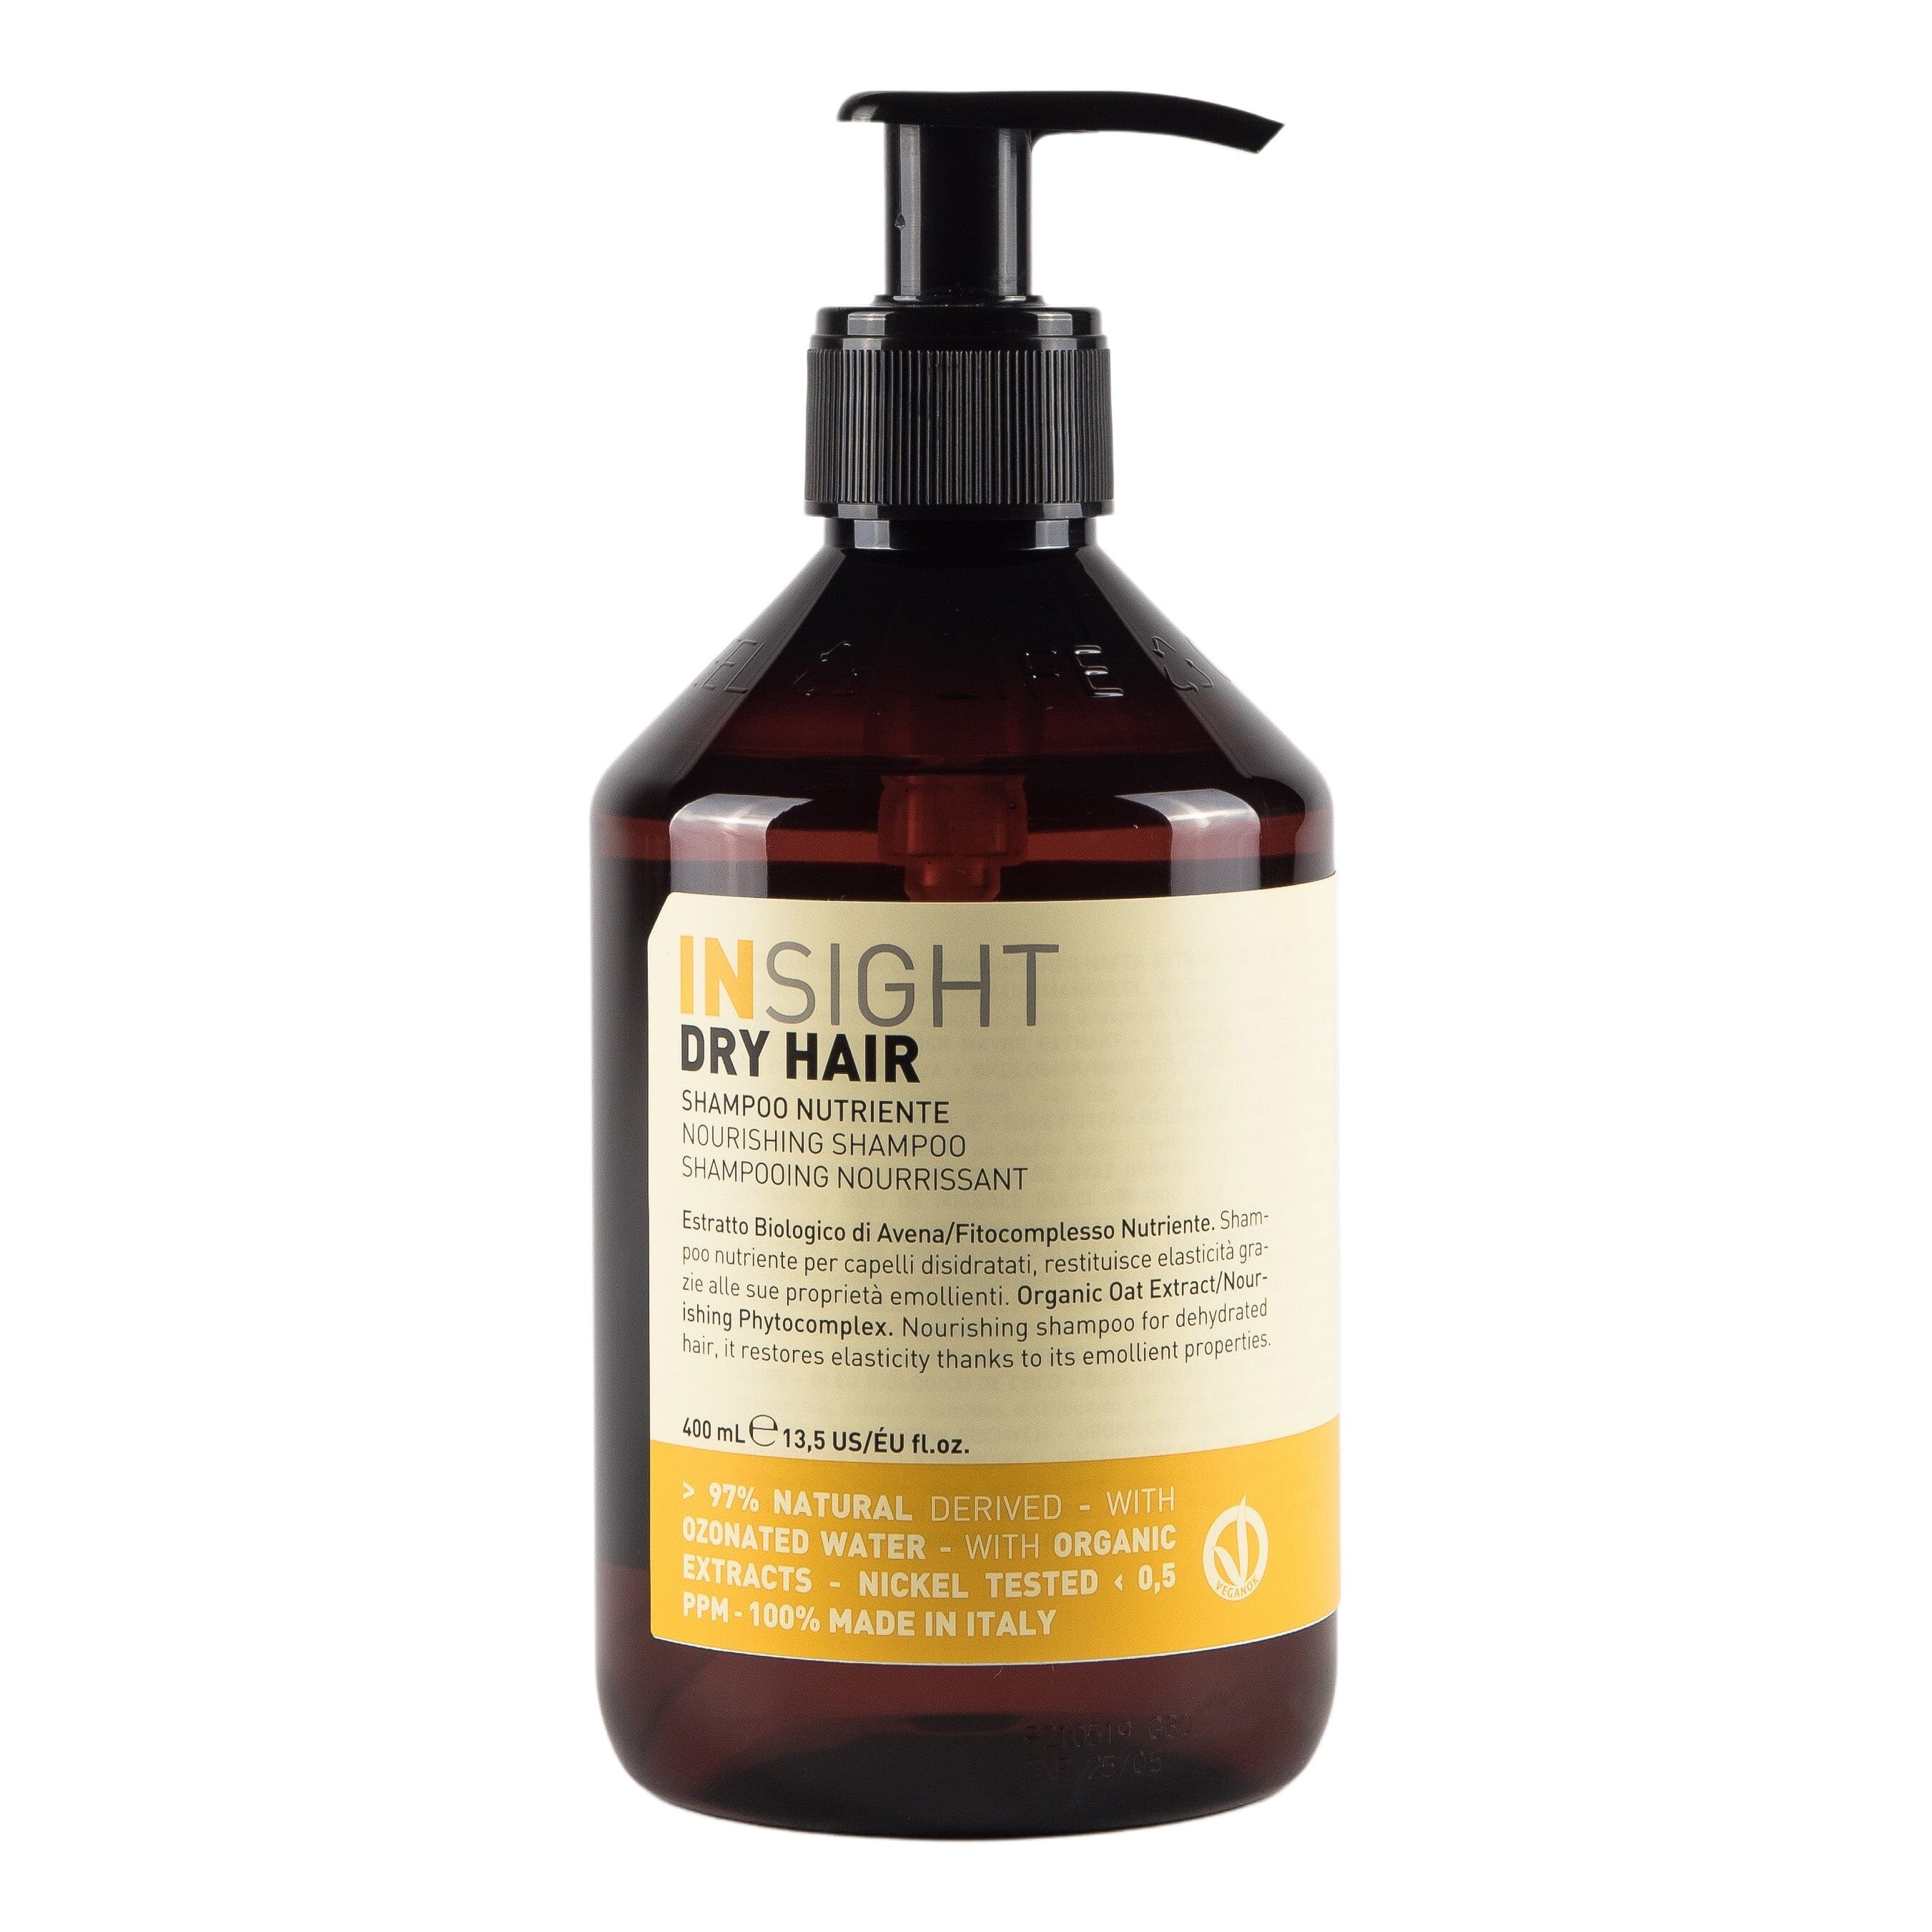 Insight Dry Hair - Nourishing sjampo